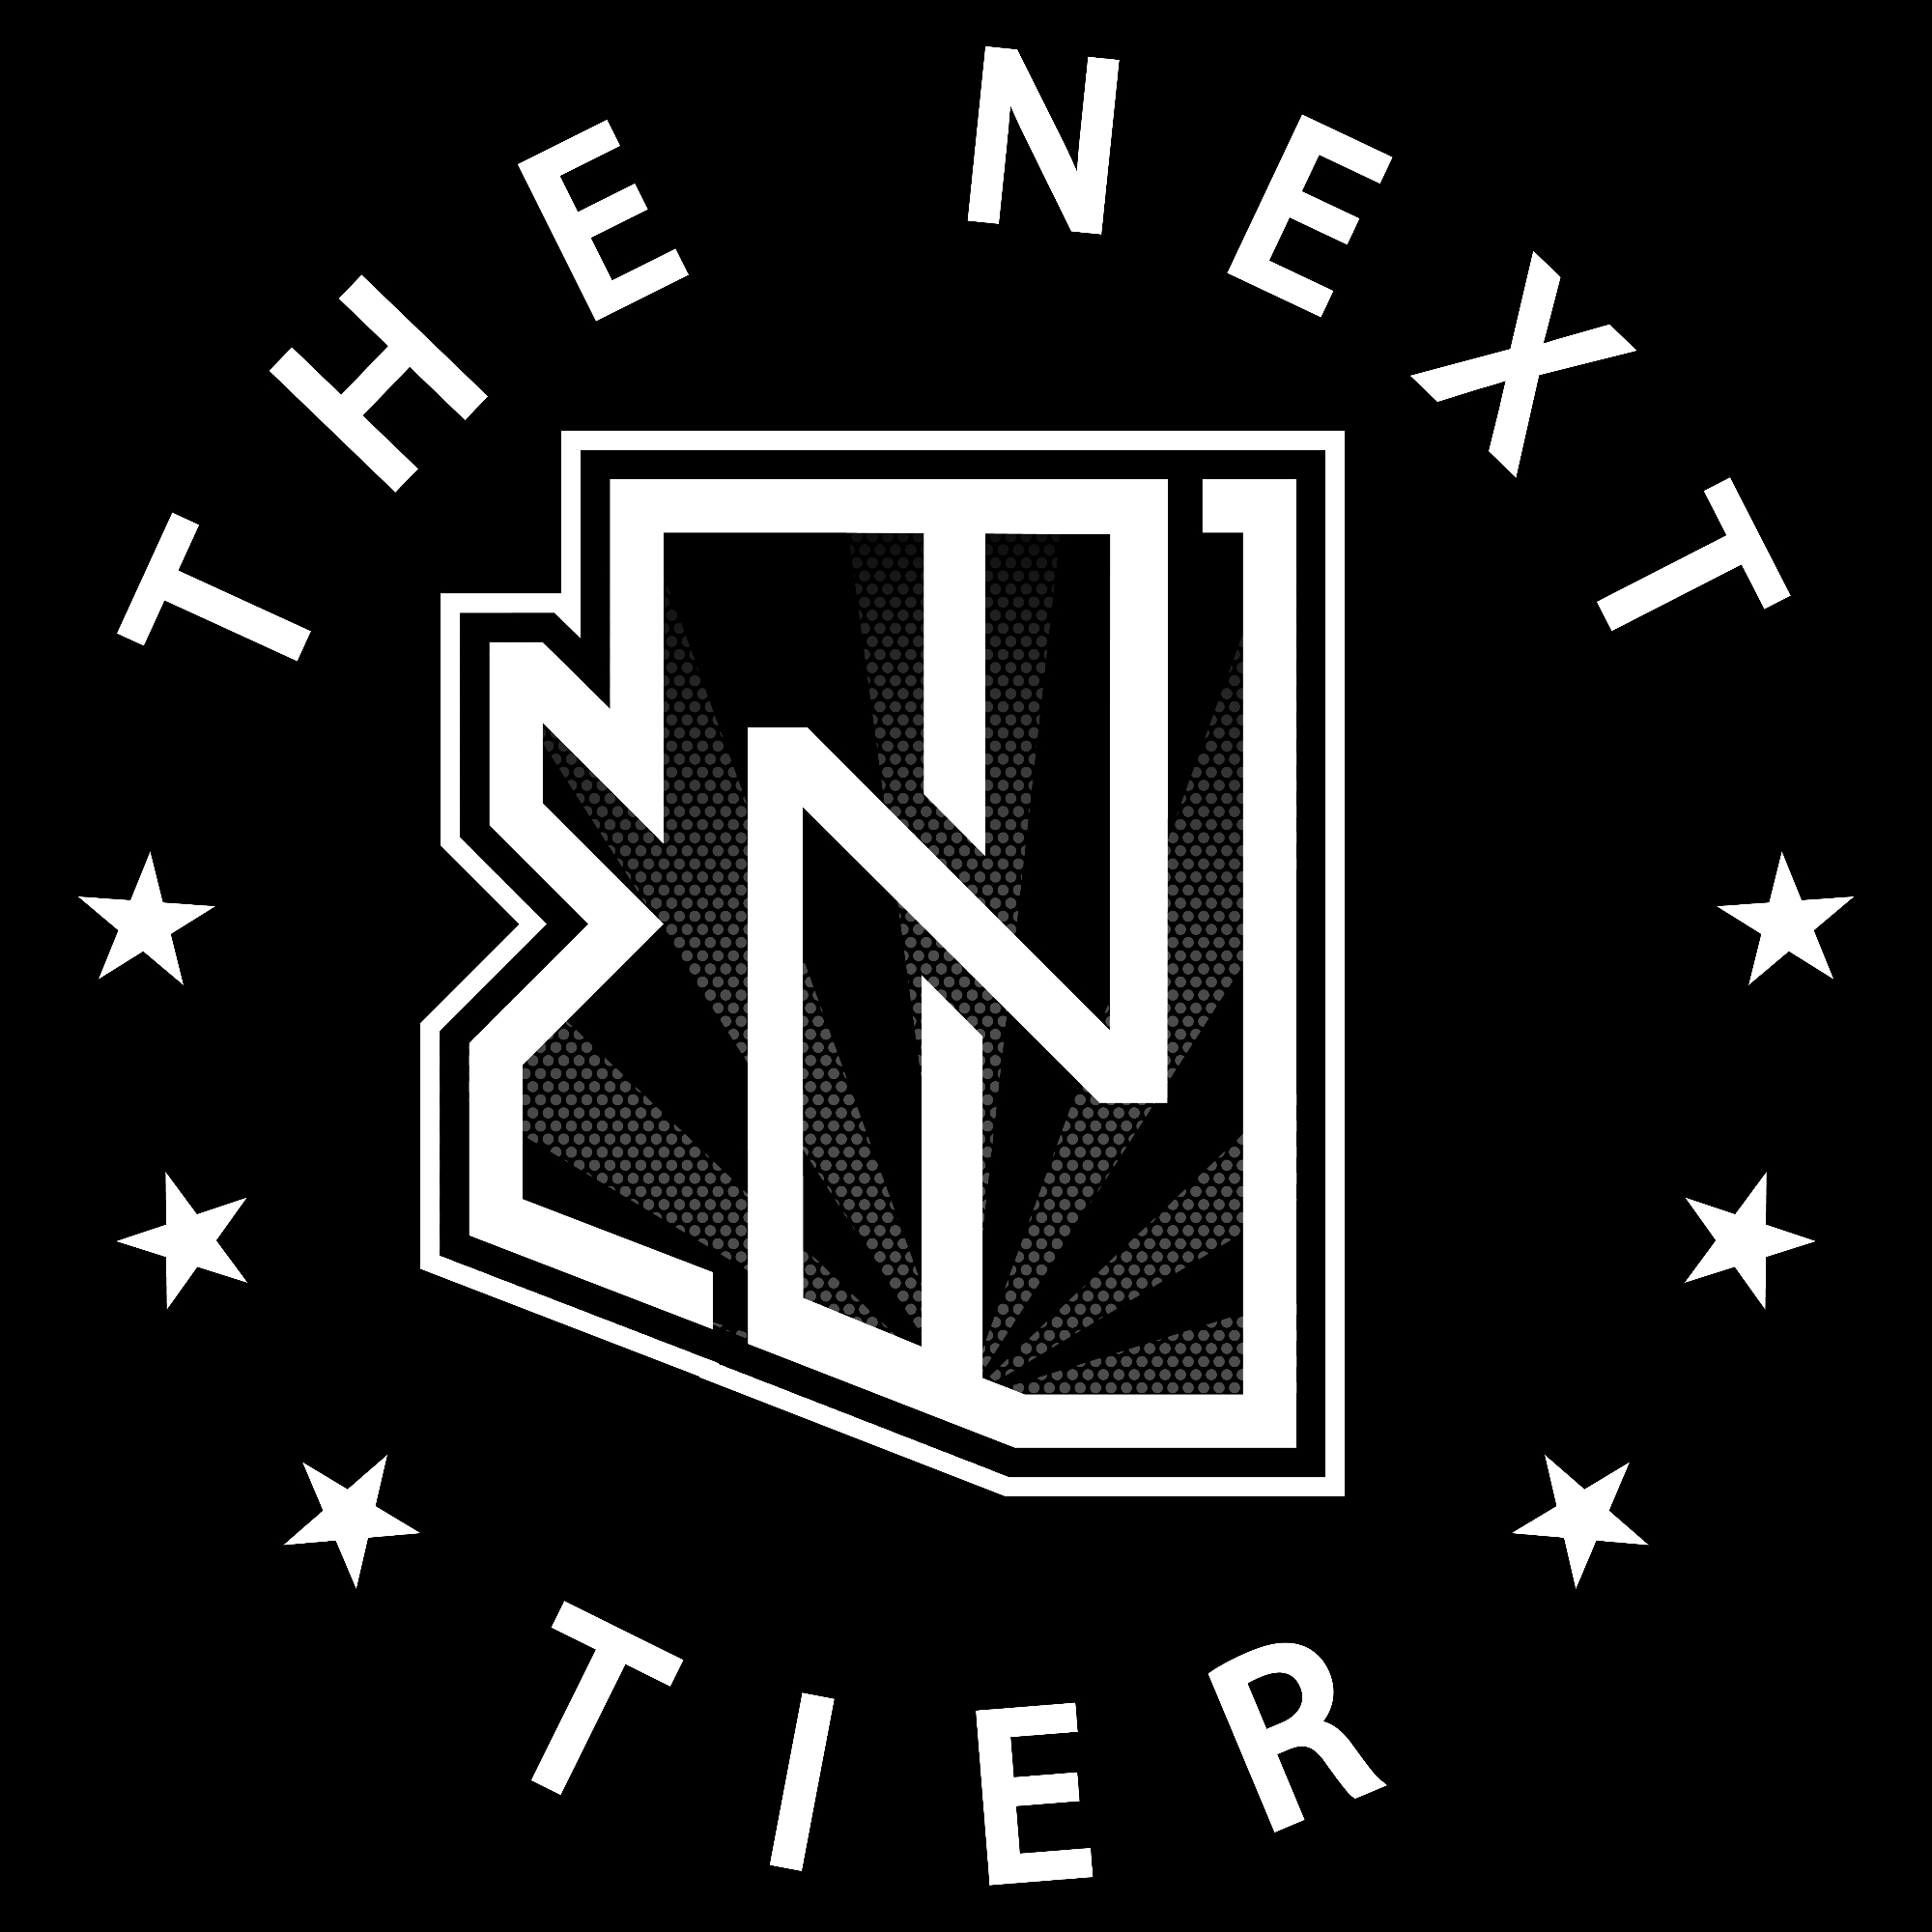 Organization logo for The Next Tier